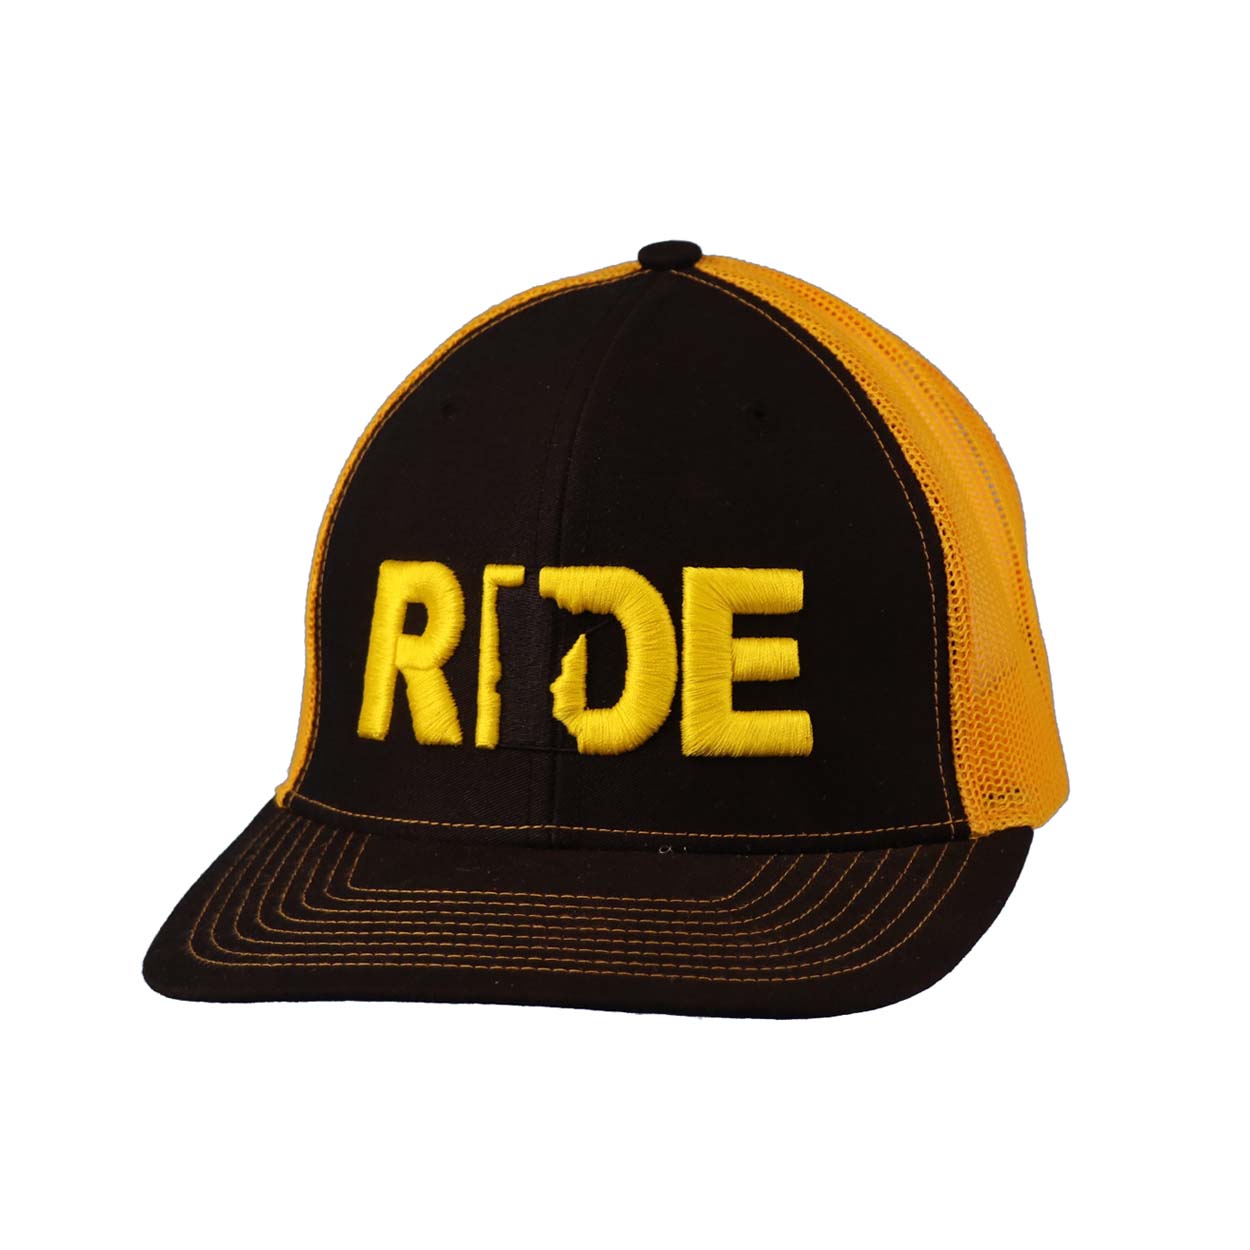 Ride Minnesota Classic Embroidered Snapback Trucker Hat Black/Yellow